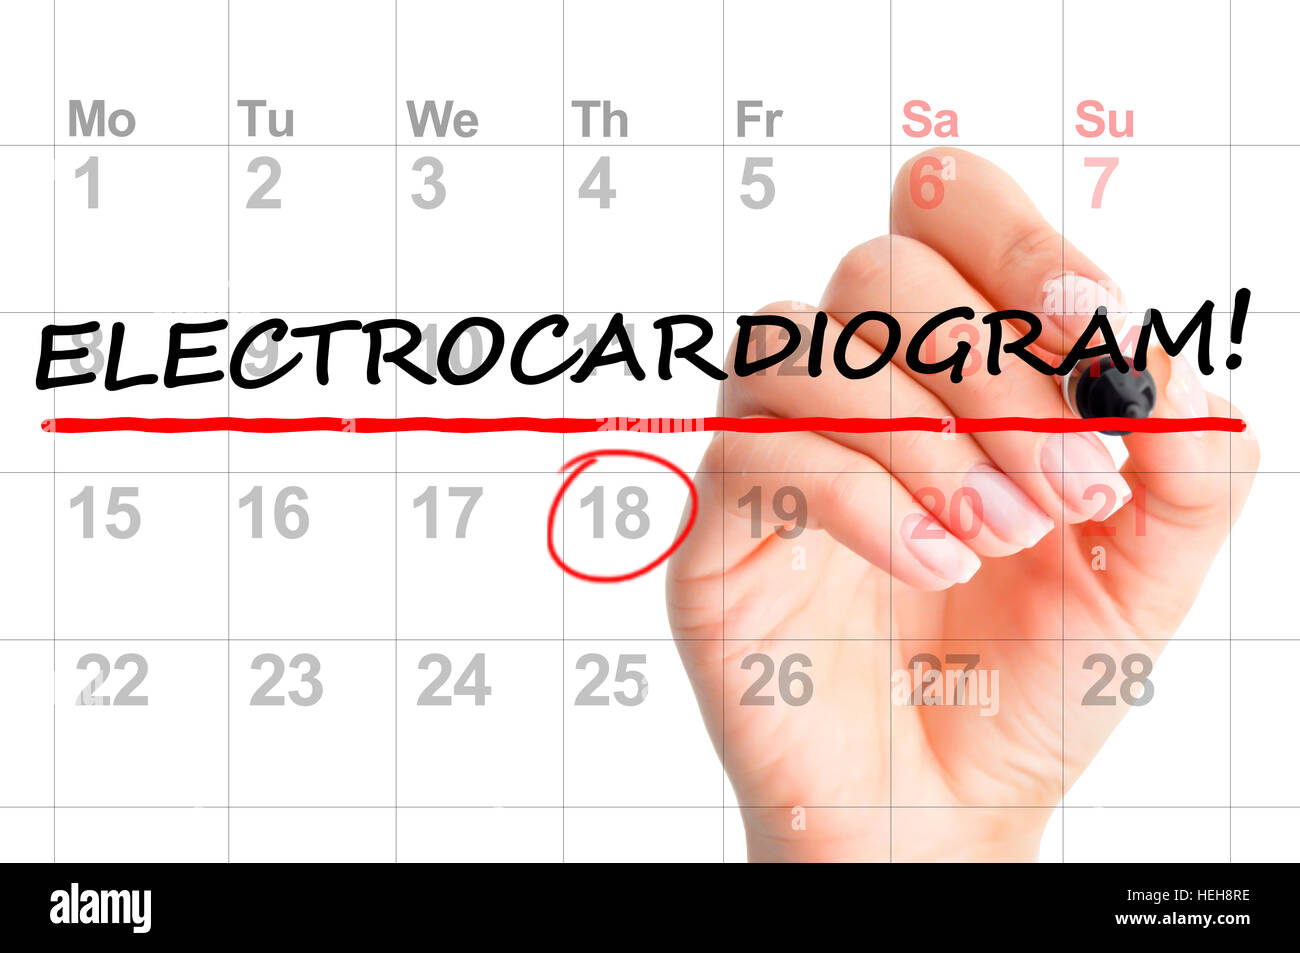 Electrocardiogram schedule date on calendar Stock Photo